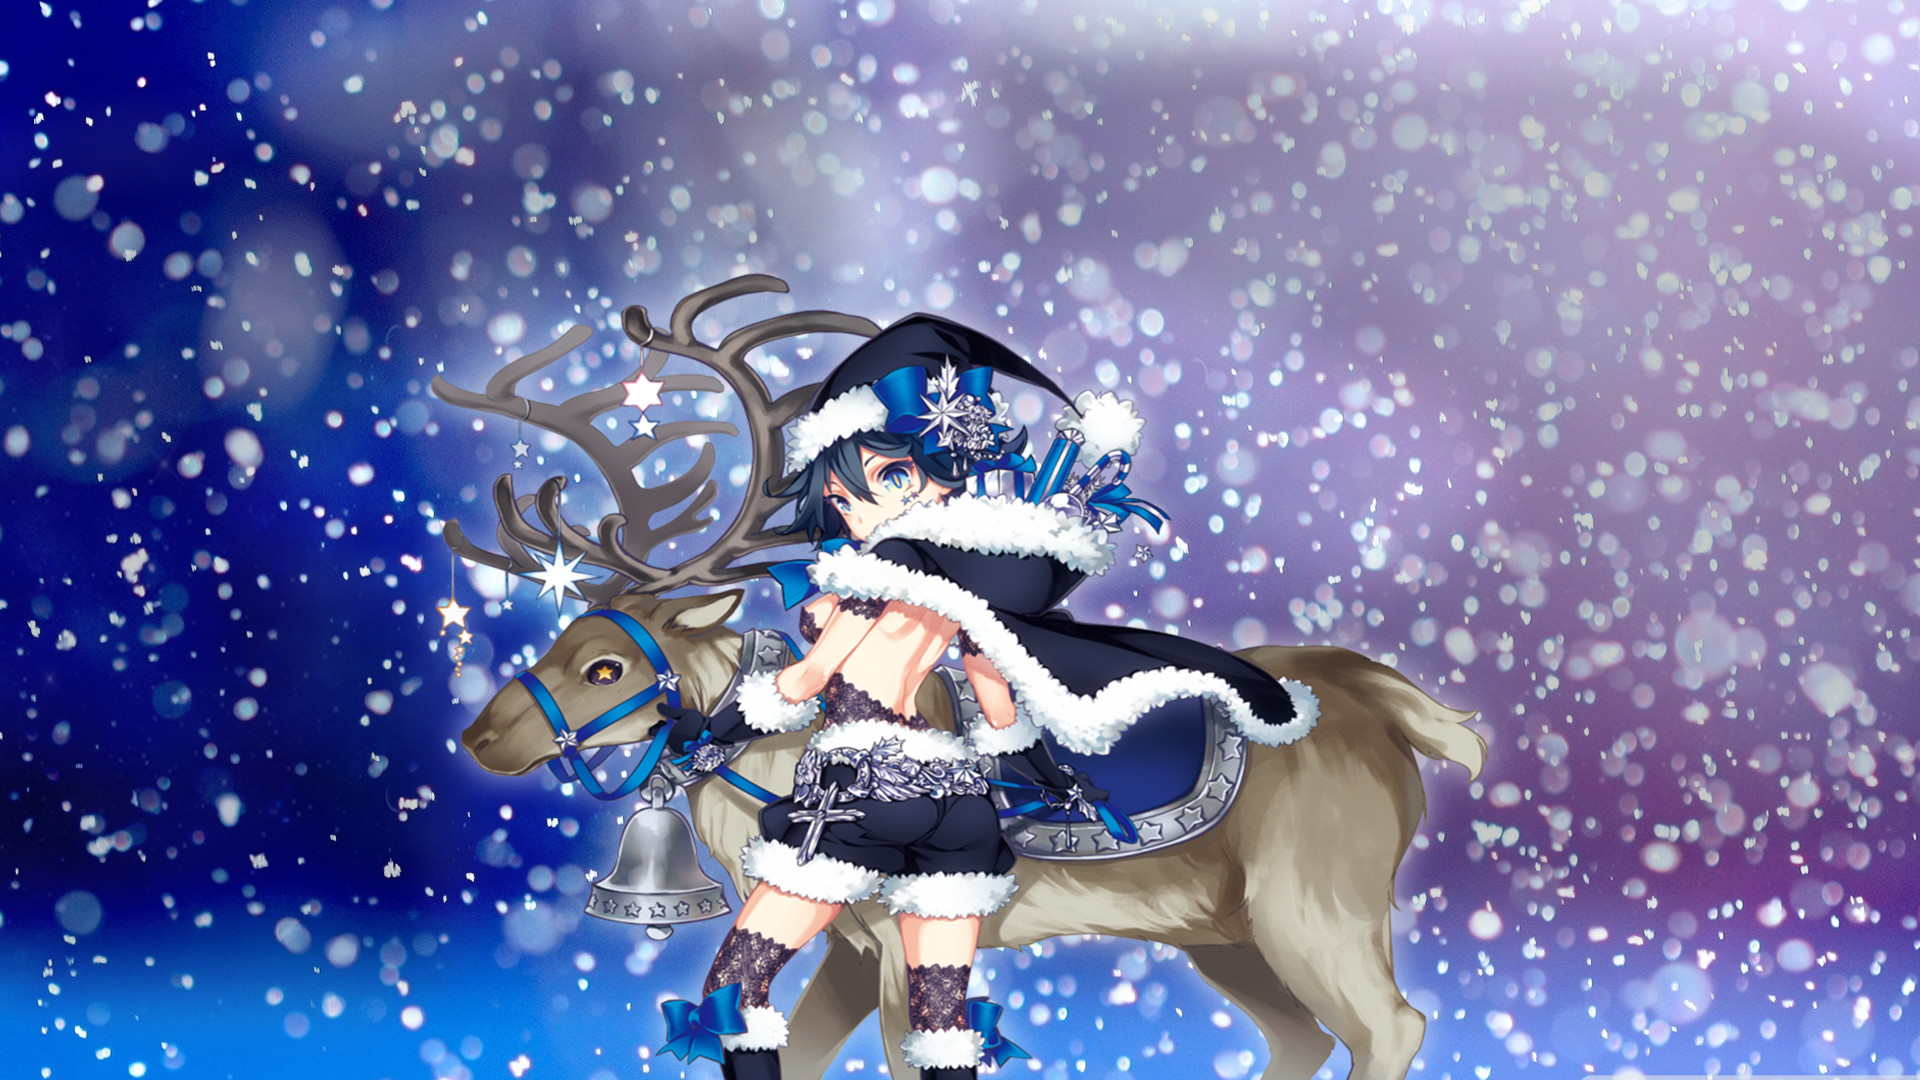 1920x1080 Blue Anime Girl Christmas Wallpaper by callmeteddy24 Blue Anime Girl Christmas  Wallpaper by callmeteddy24